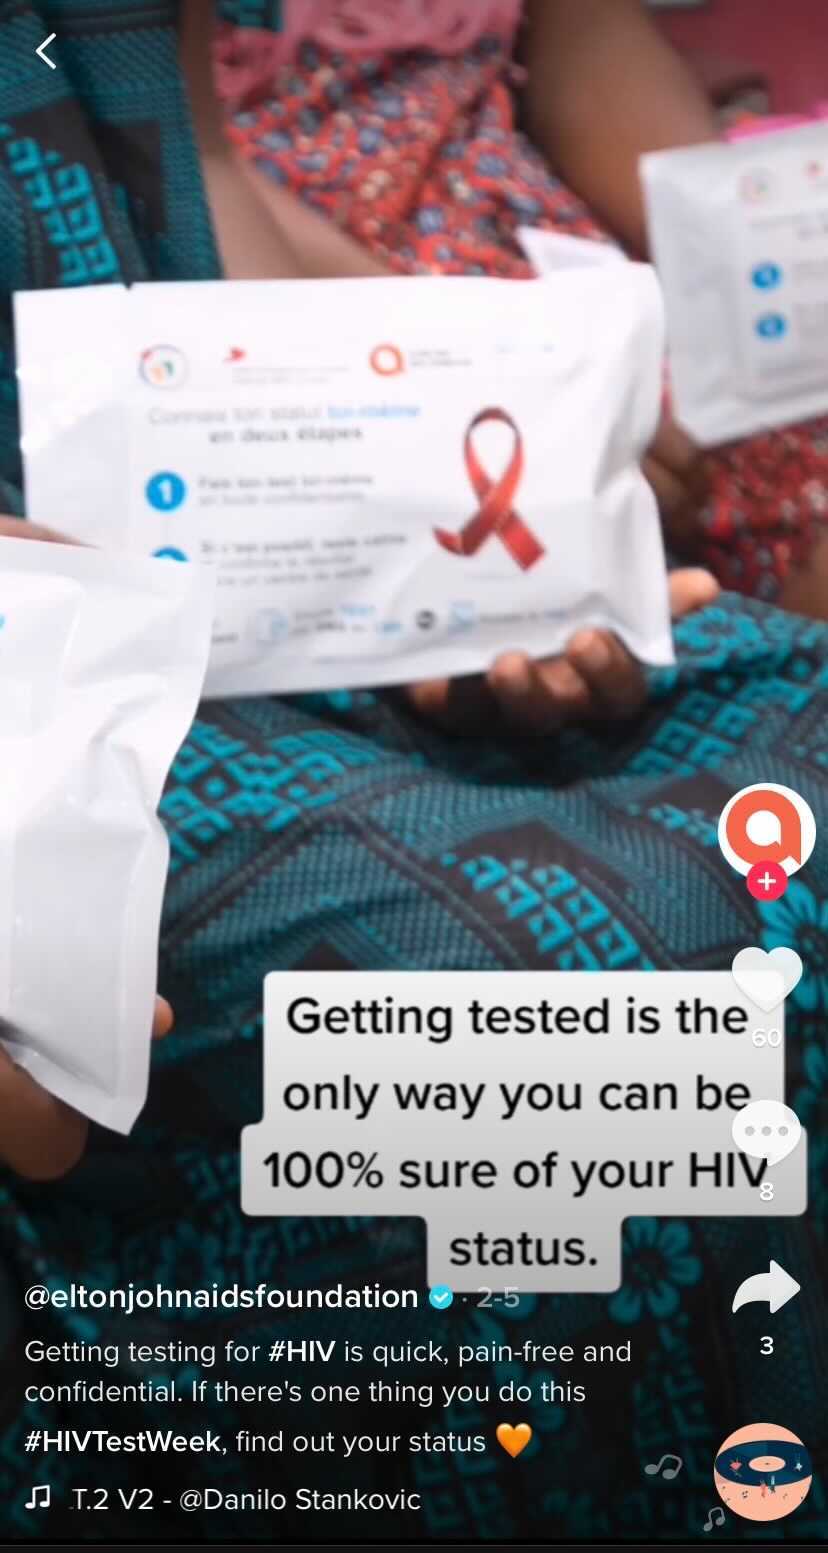 elton john aids foundation on tiktok promoting HIV testing